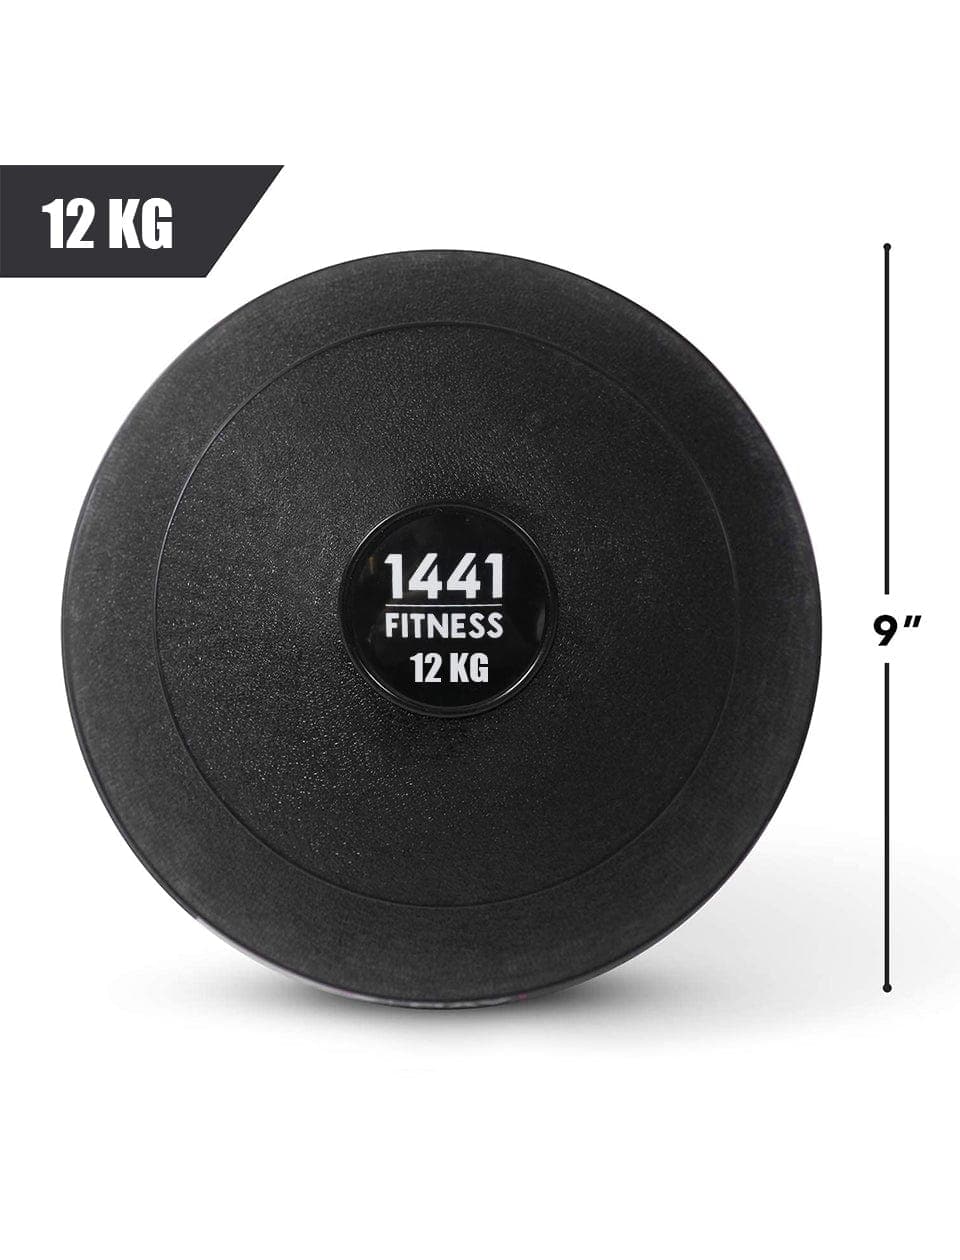 PRSAE Crossfit 12 KG 1441 Fitness Pro Grip Slam Ball - (2 to 20 KG)